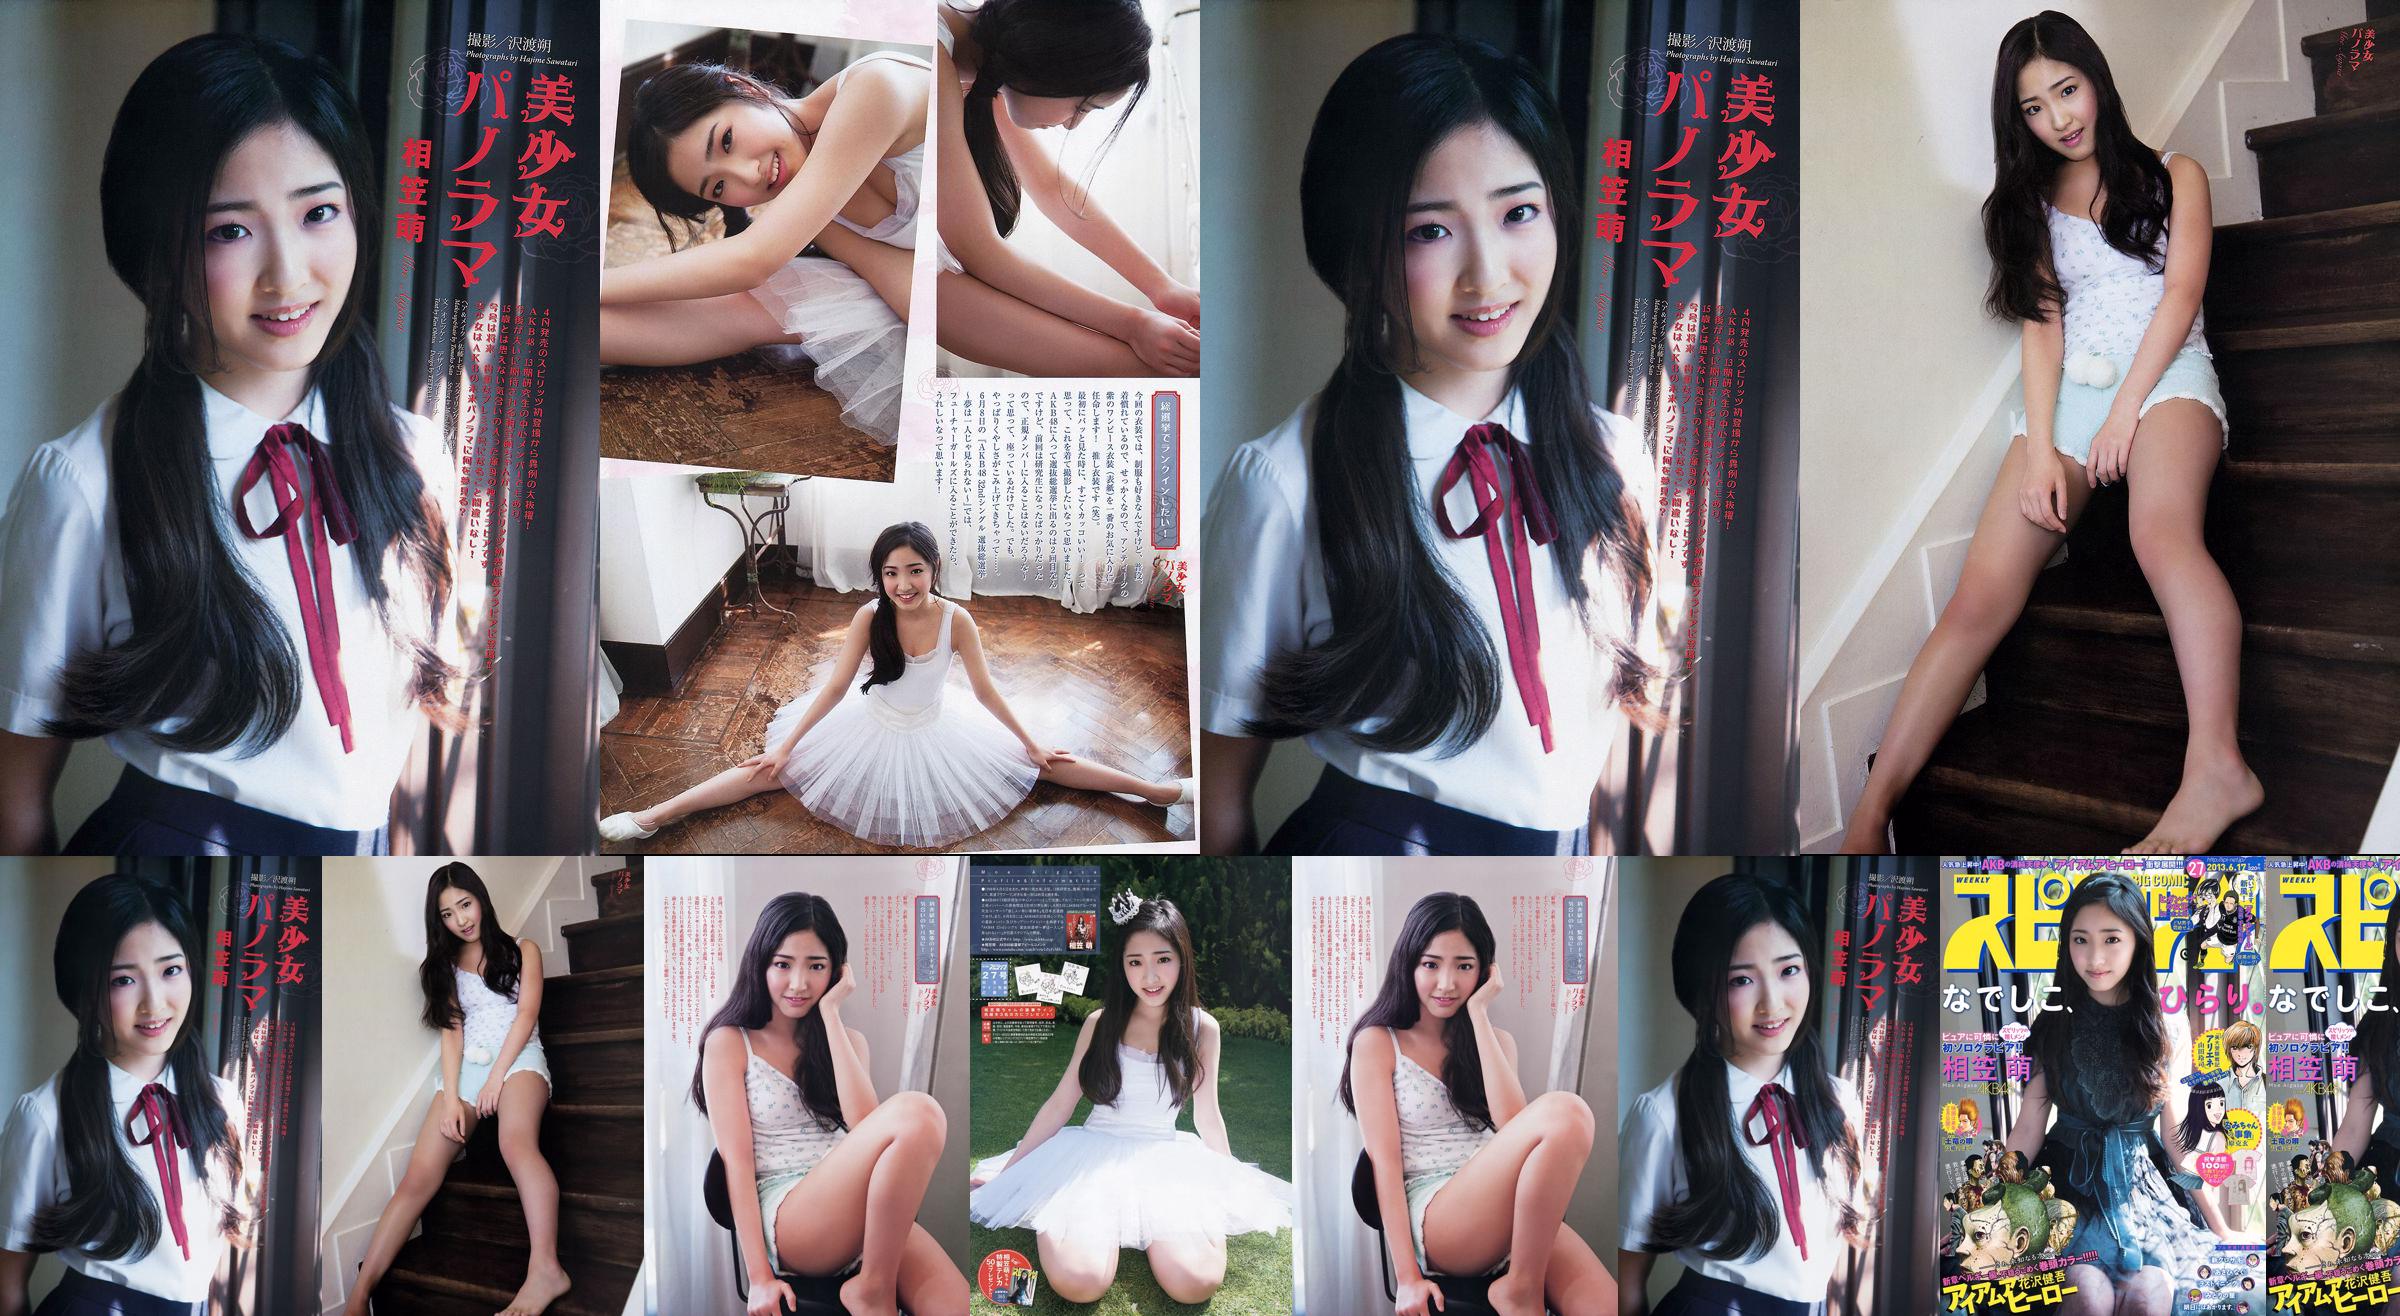 [Grands esprits de la bande dessinée hebdomadaire] Aikasa Moe 2013 n ° 27 Magazine photo No.2e3e0f Page 1